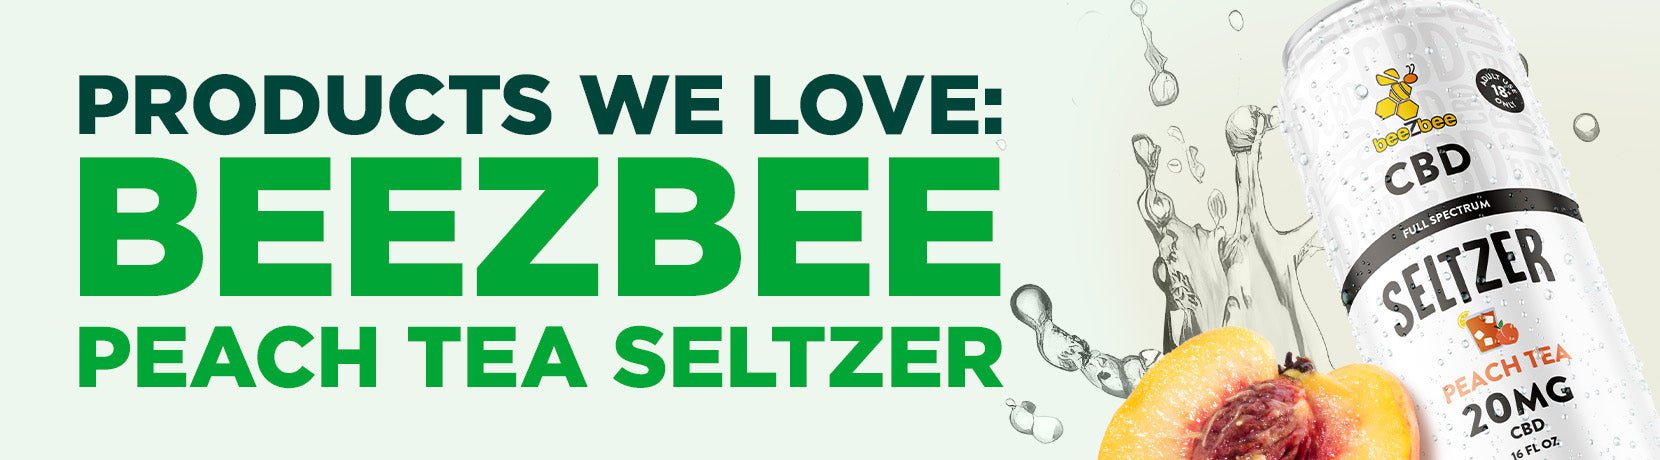 Products We Love: beeZbee CBD Peach Tea Seltzer - Shop CBD Kratom